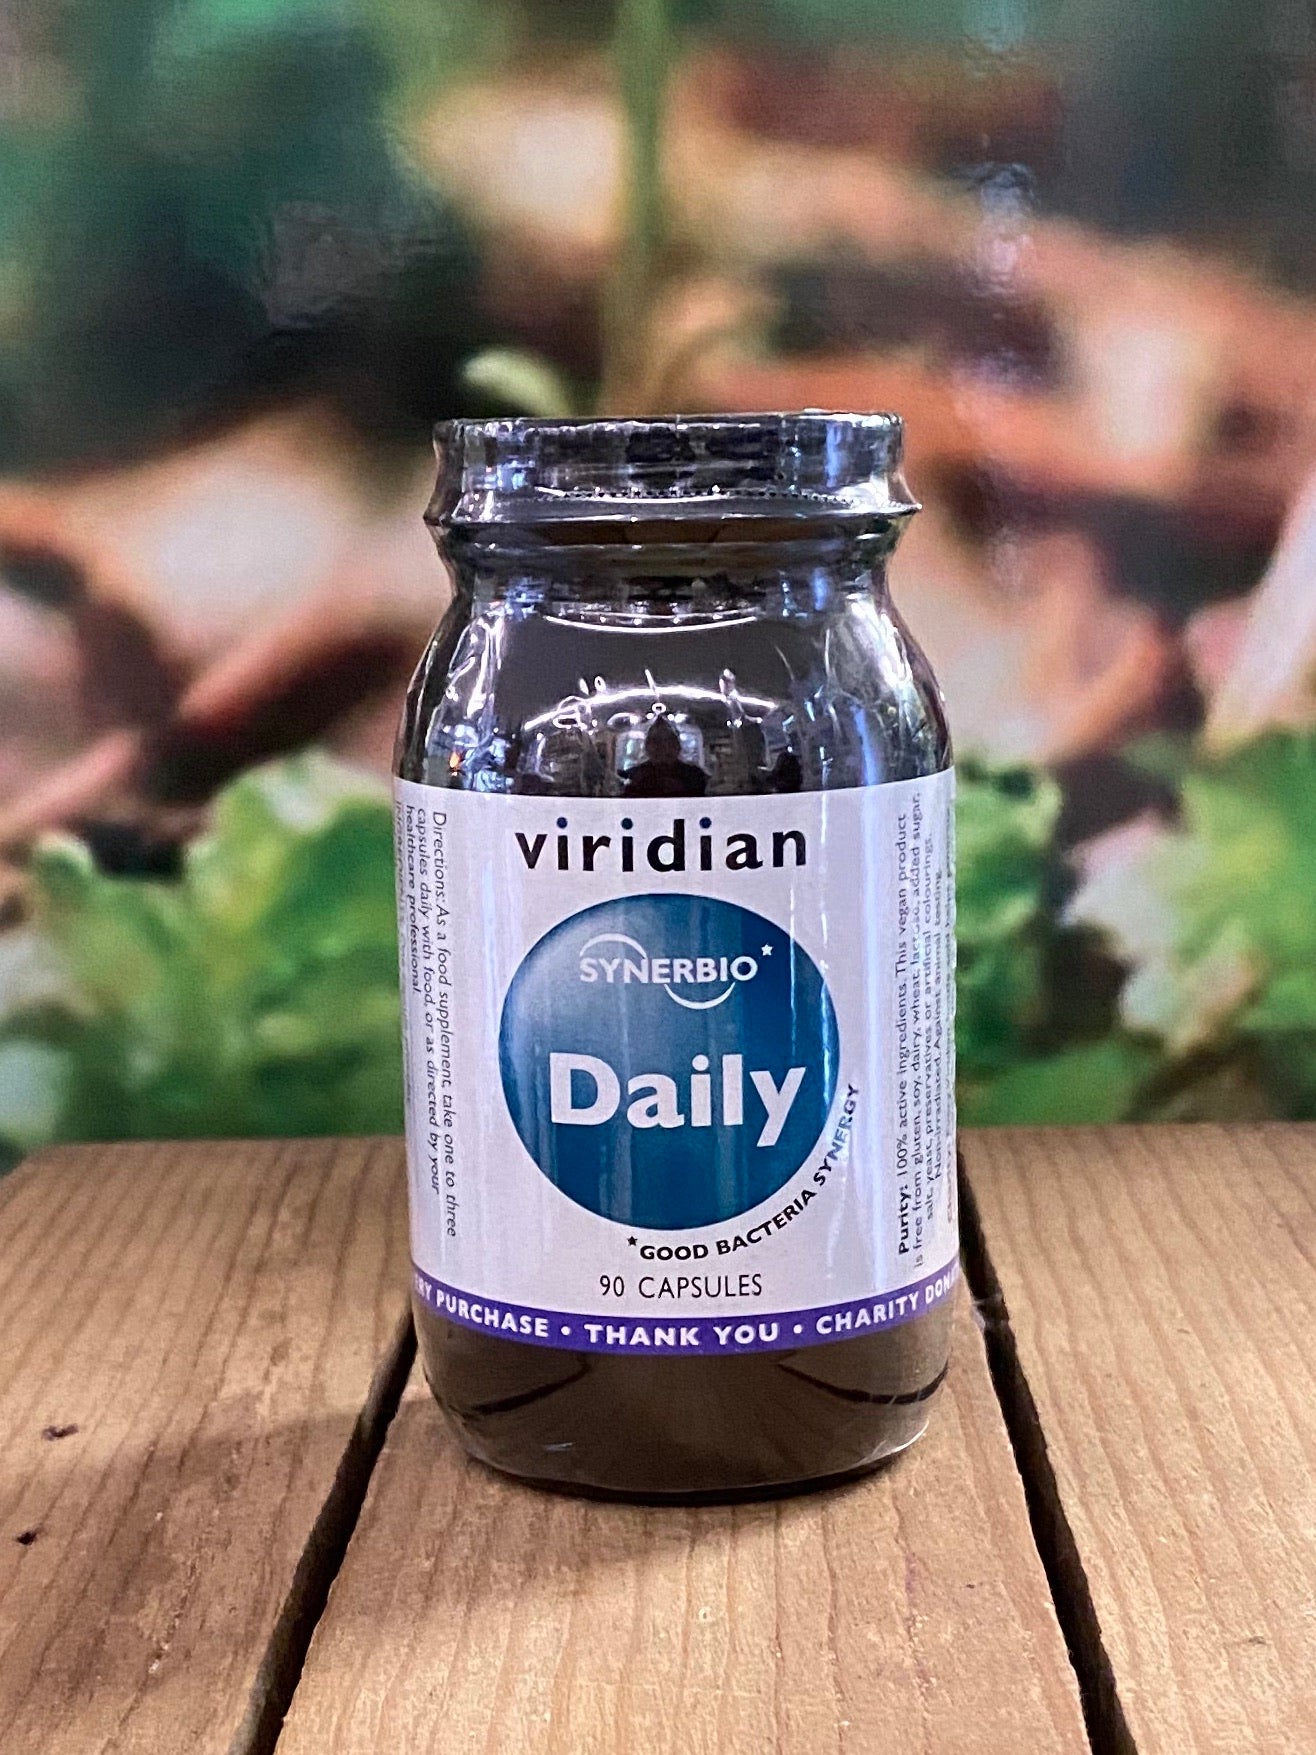 Viridan Daily 90 capsules